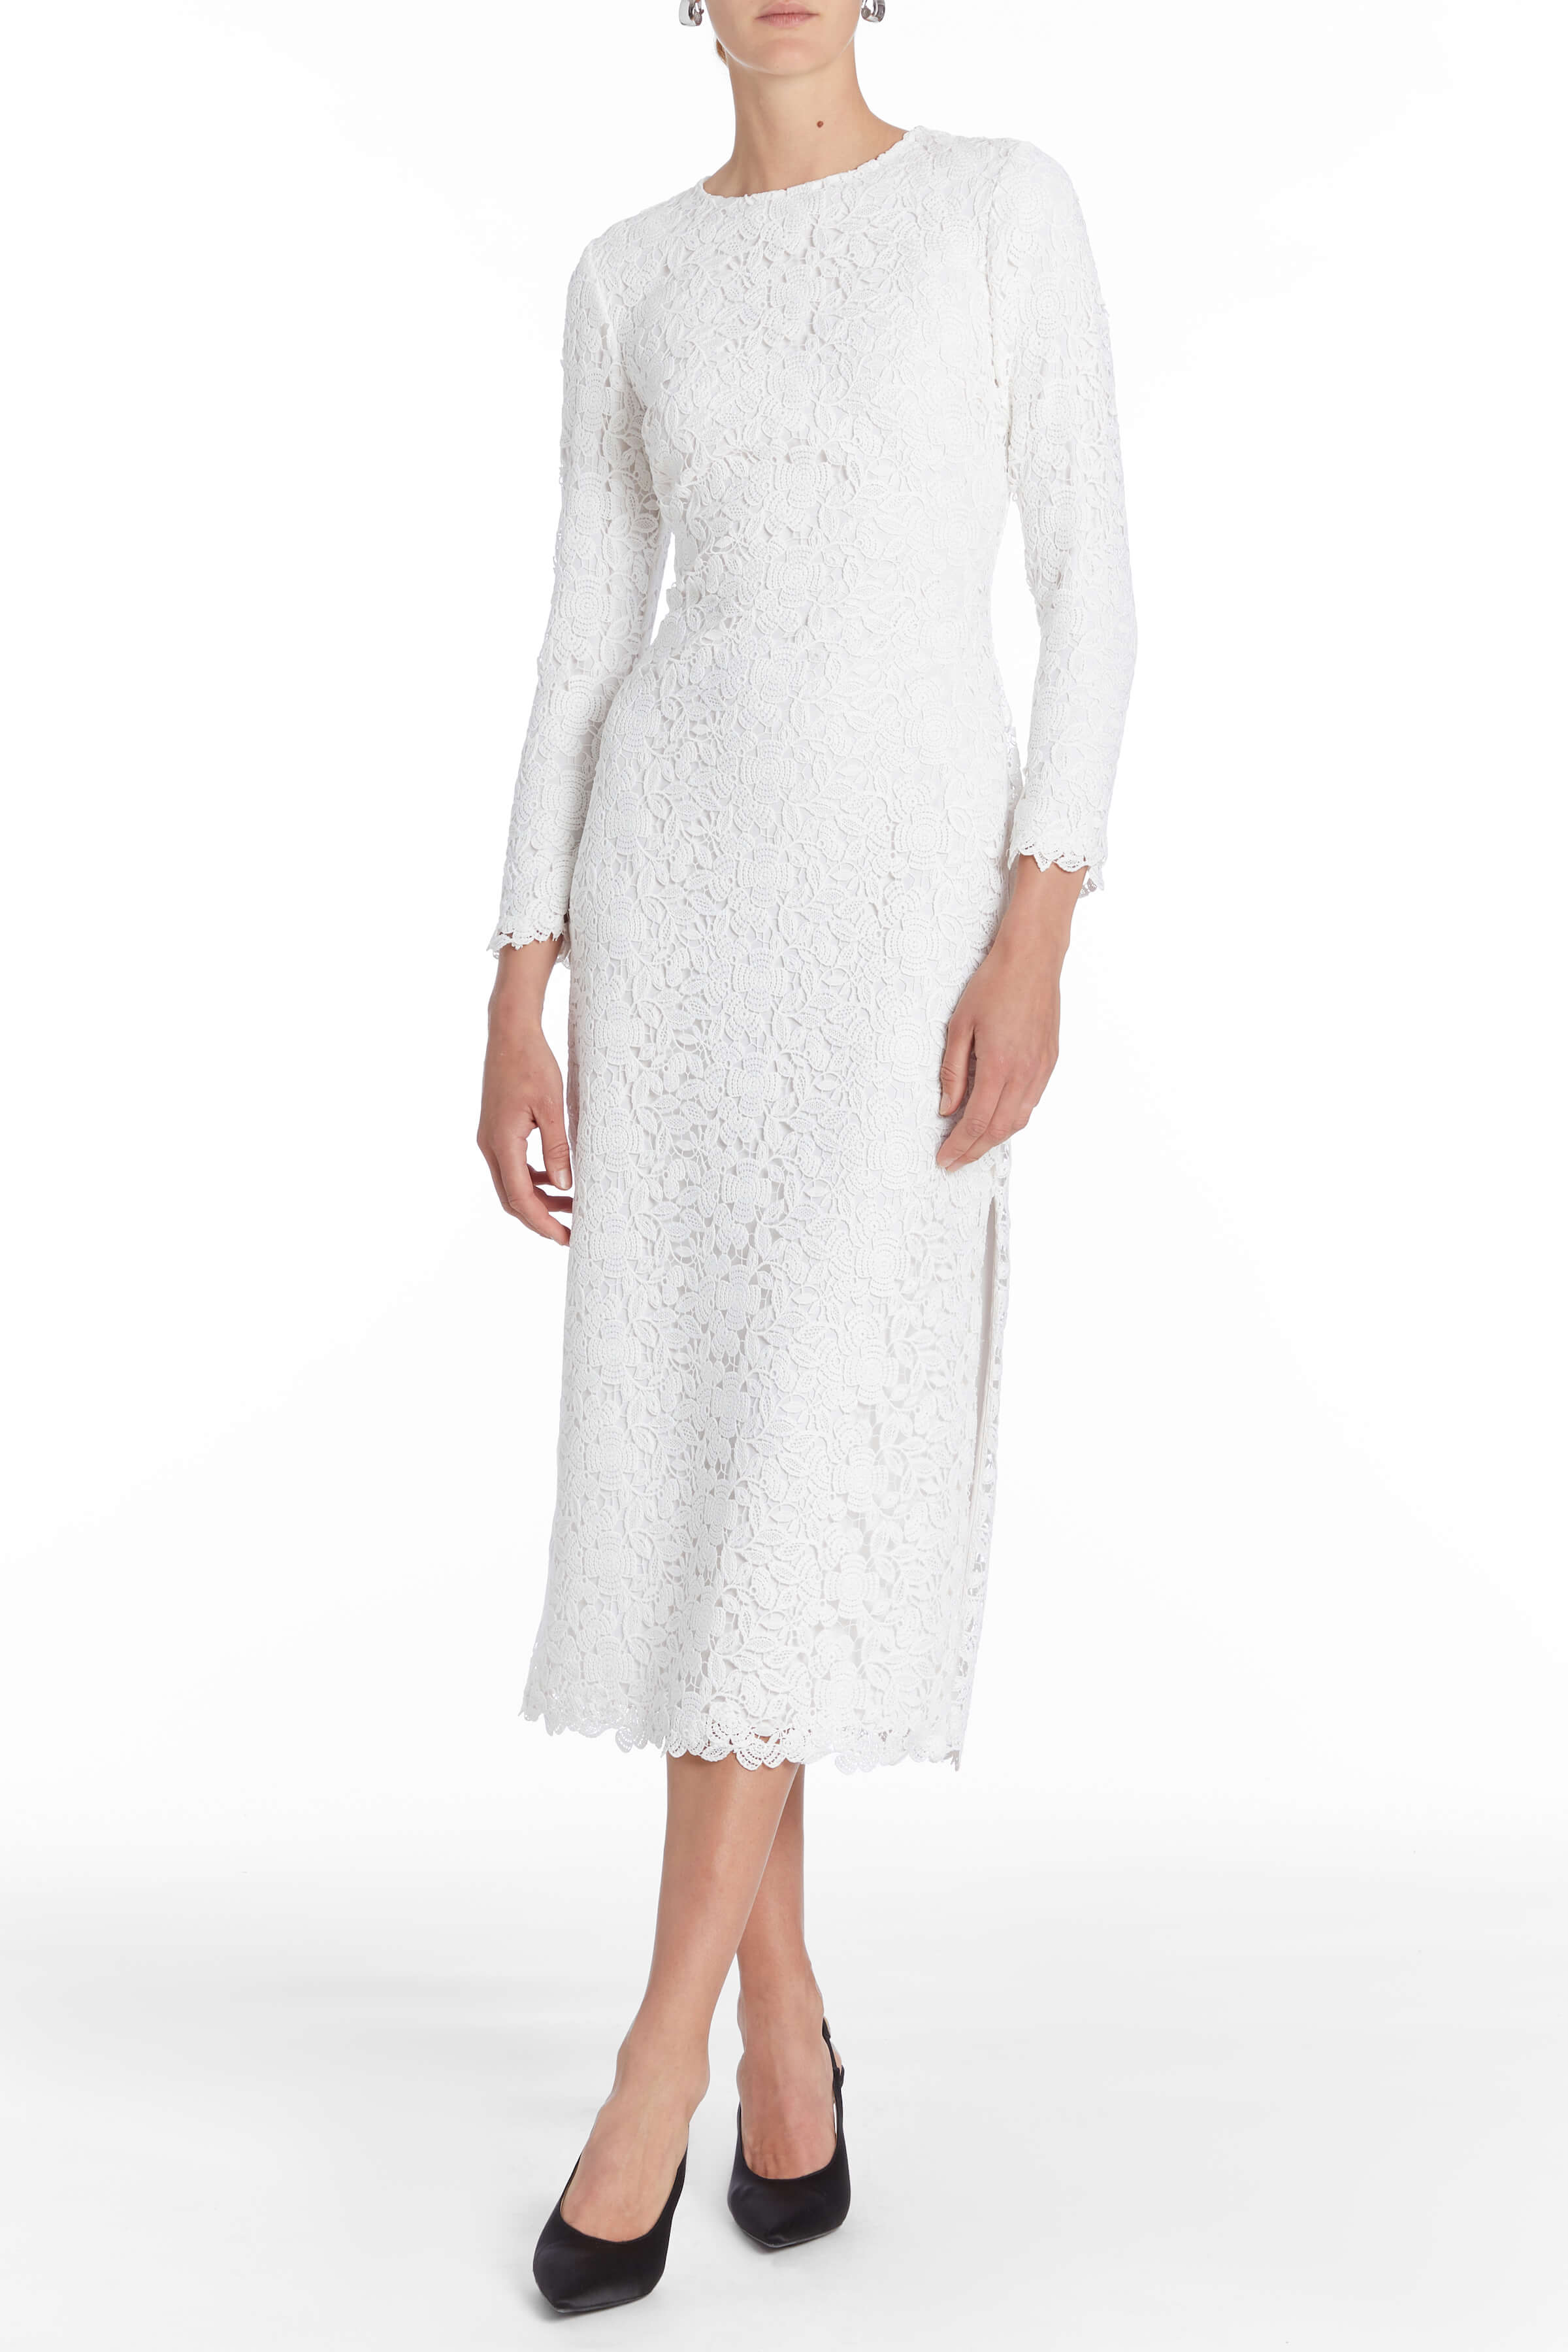 Arizona White Crochet Lace Midi Dress